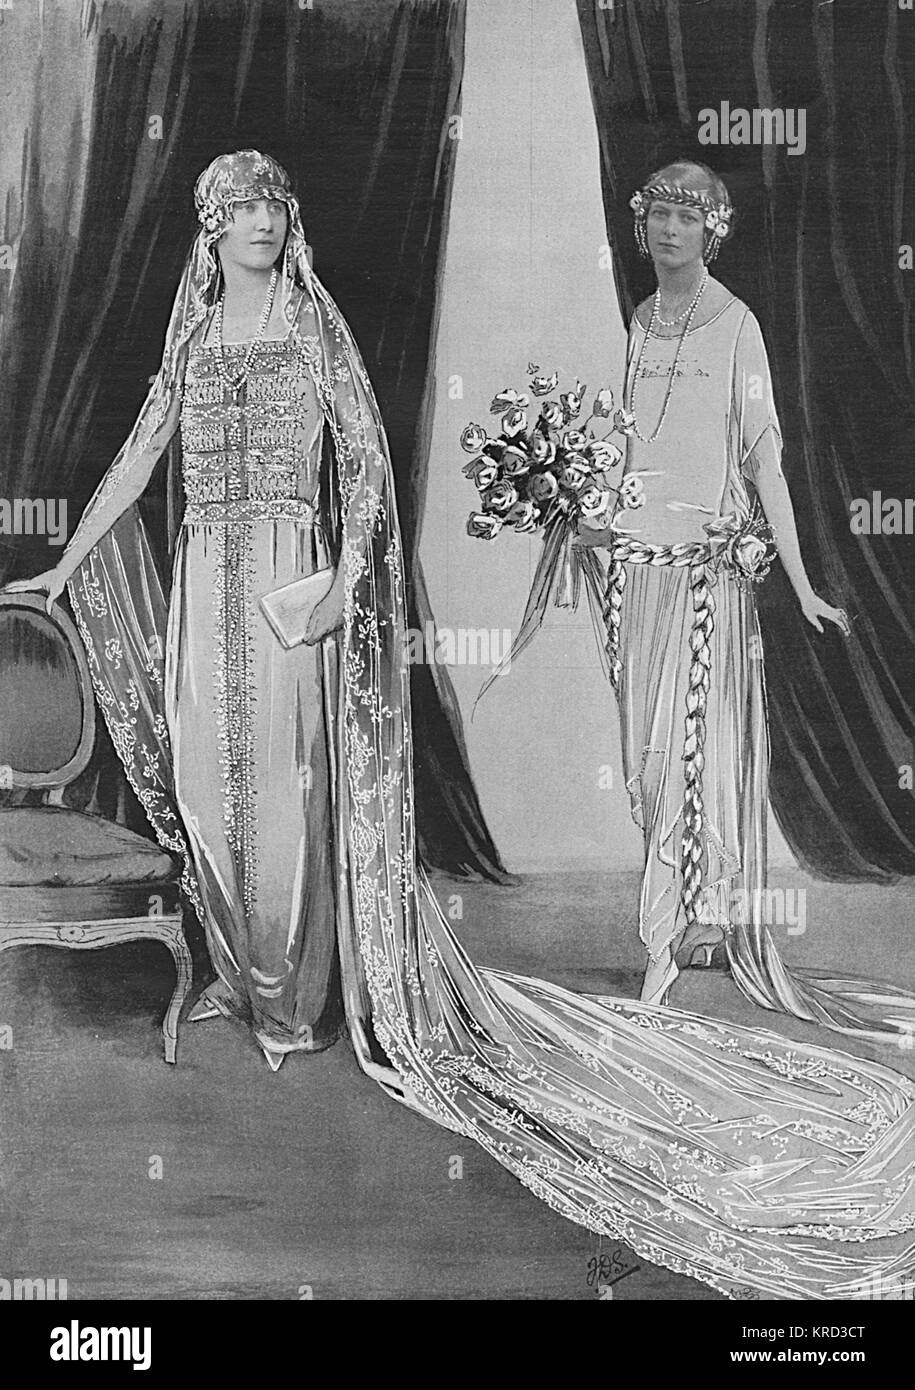 Royal wedding, 1923 - bridal gown & bridesmaid dress Stock Photo